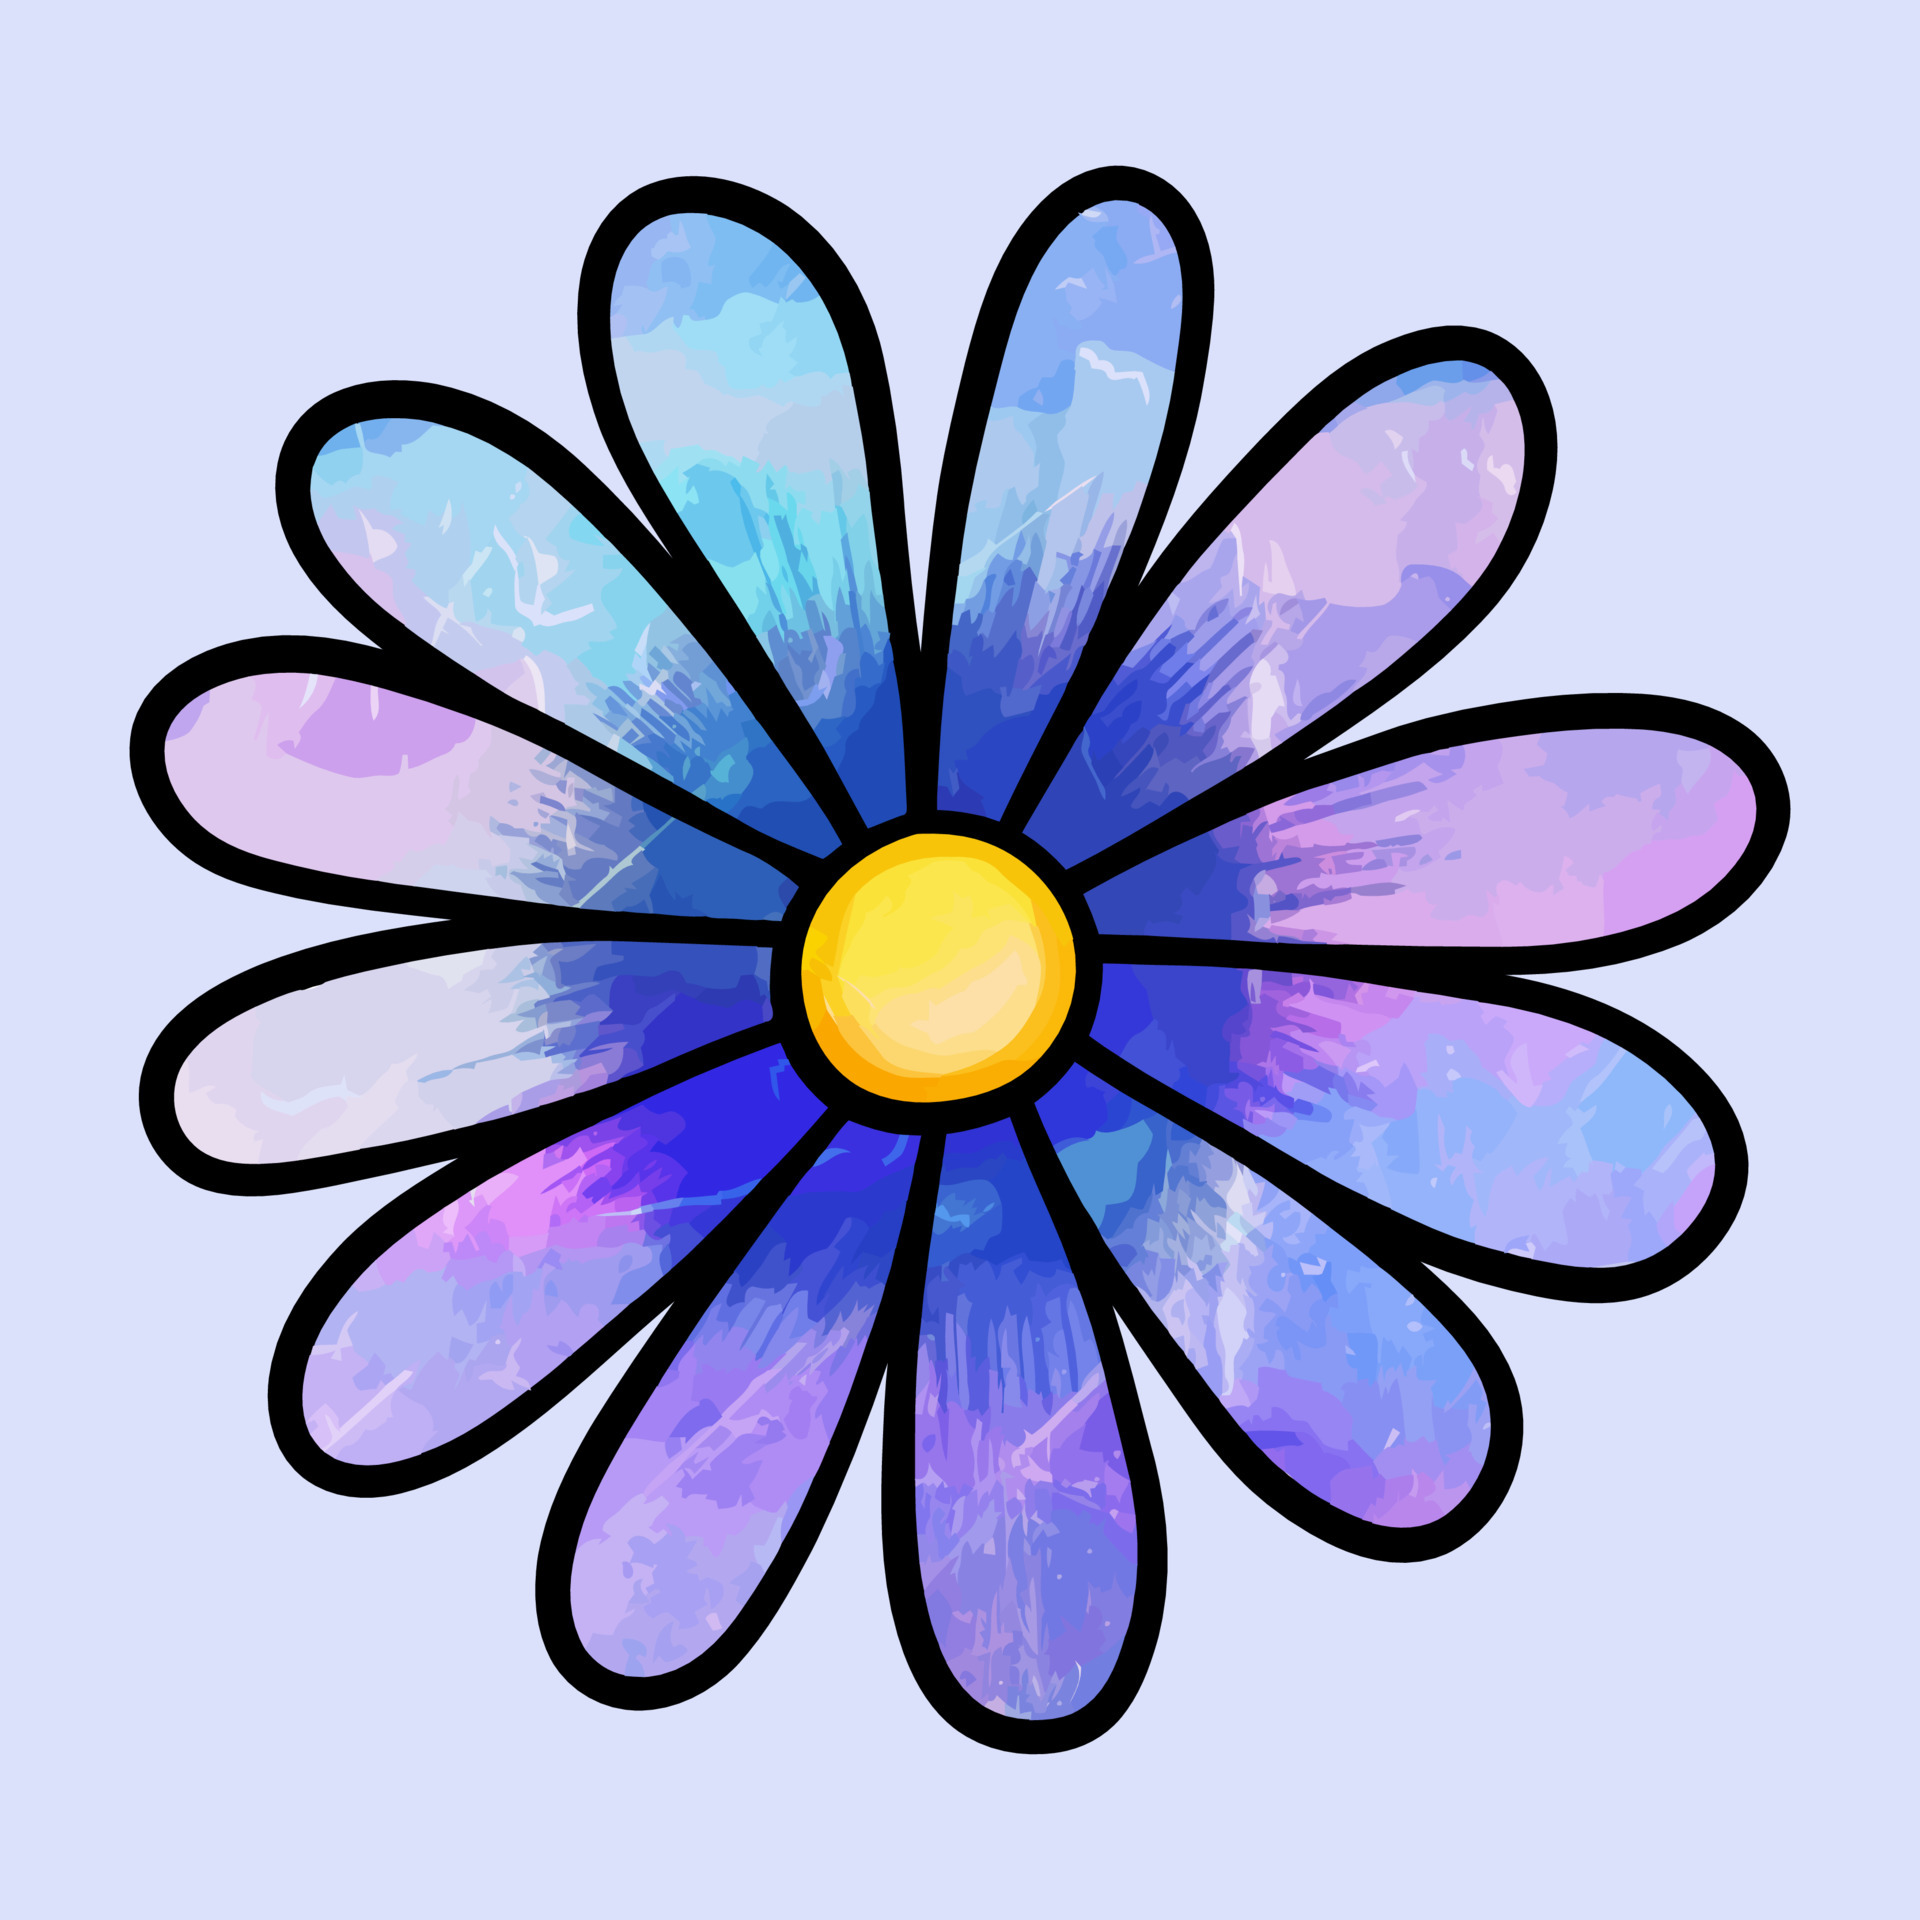 Indigo Blue Watercolor Floral Daisy Doodle 5365486 Vector Art at